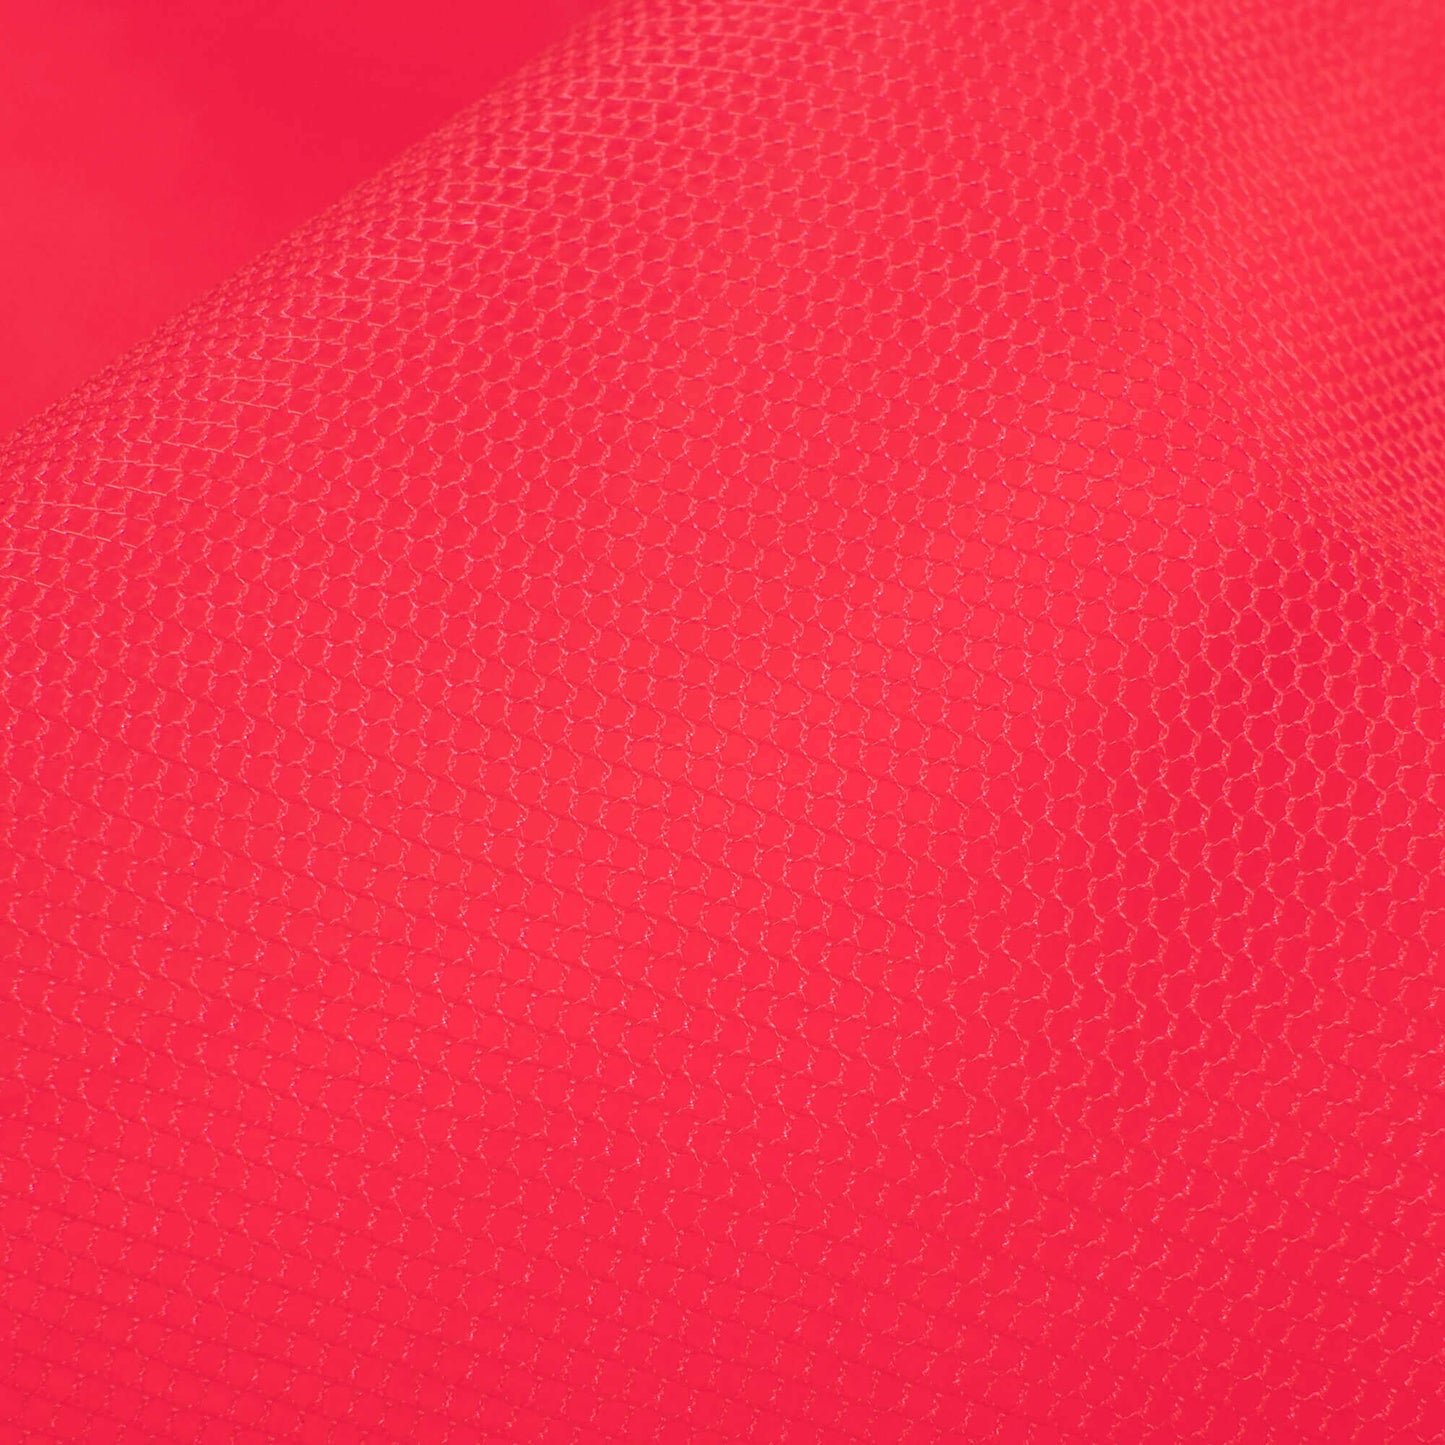 Desire Pink Plain Premium Quality Butterfly Net Fabric